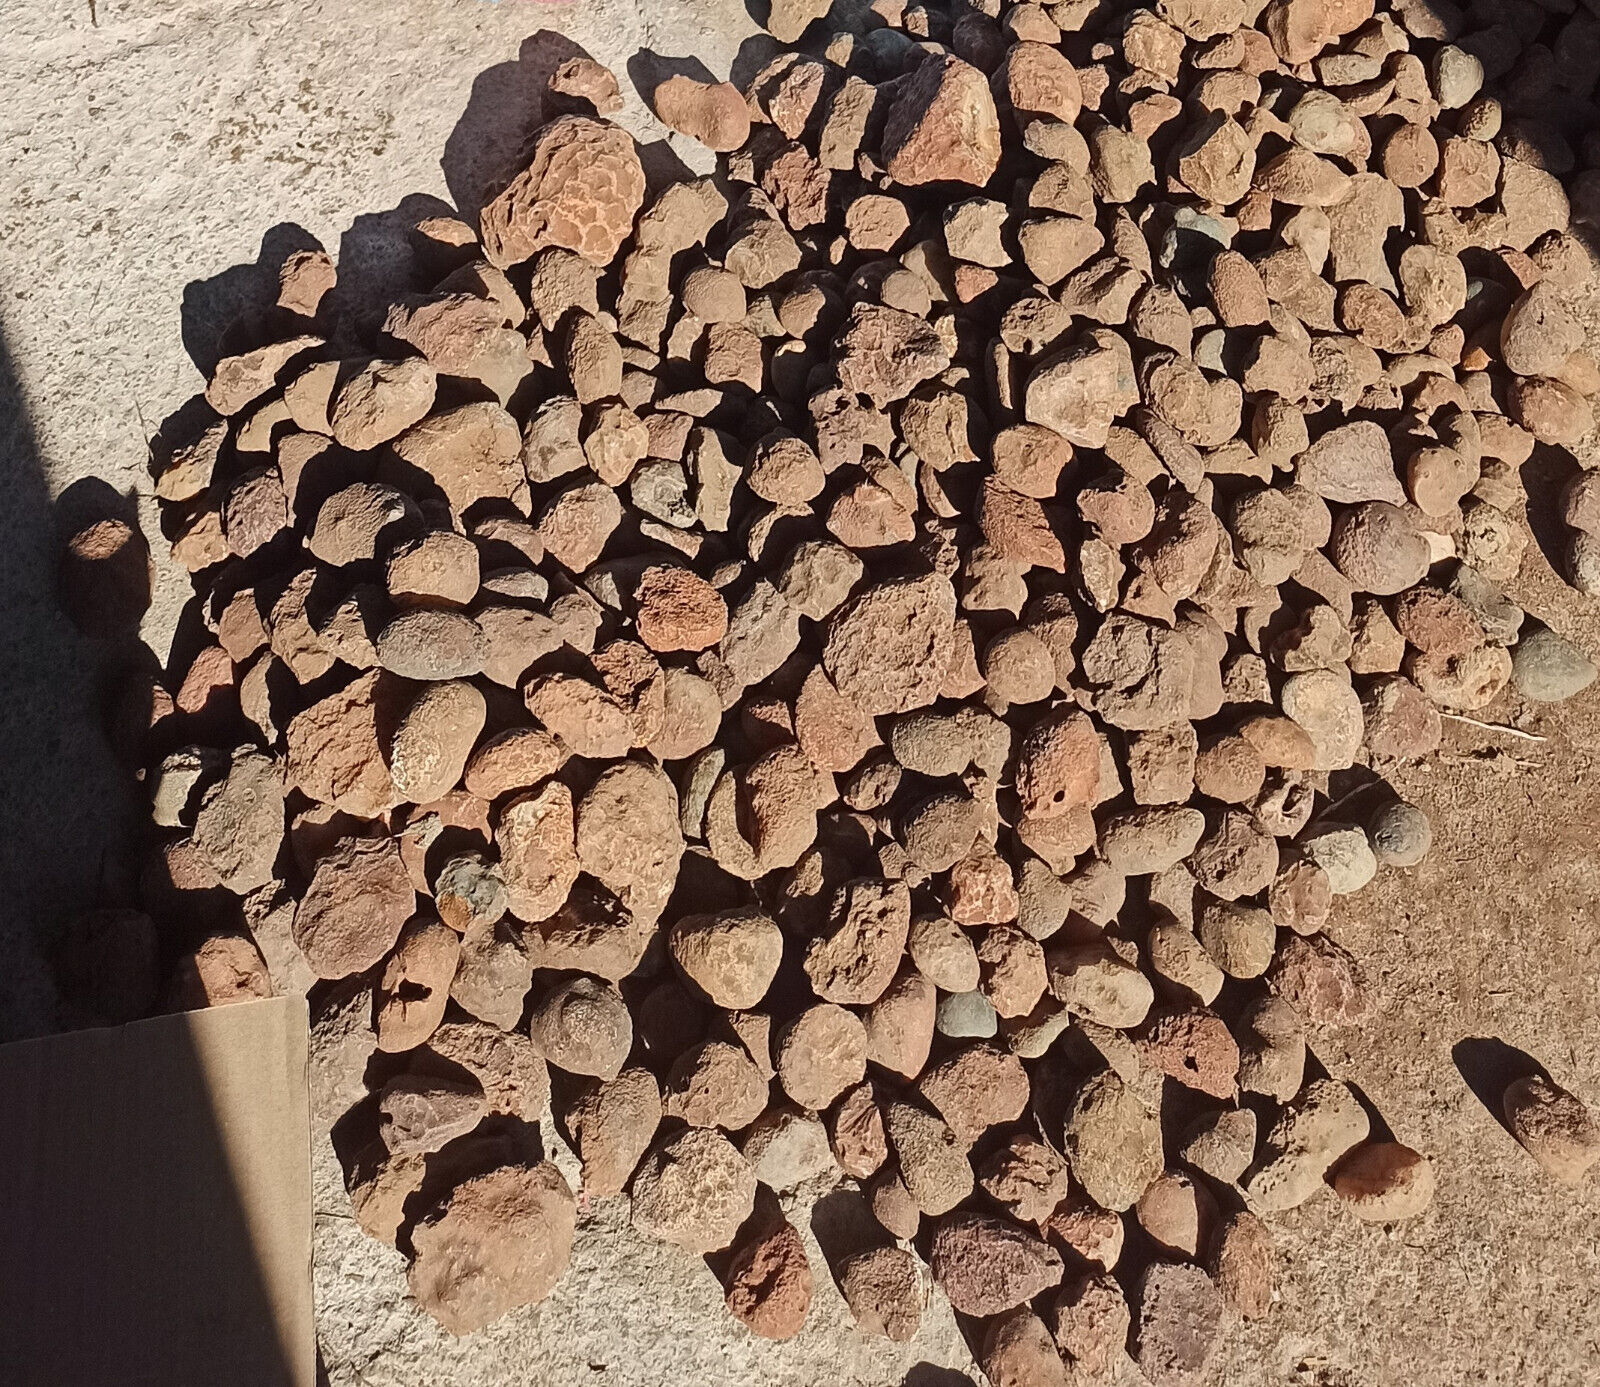 Agate agat achat ágata quartz chalcedony Malawi 10 pound rough